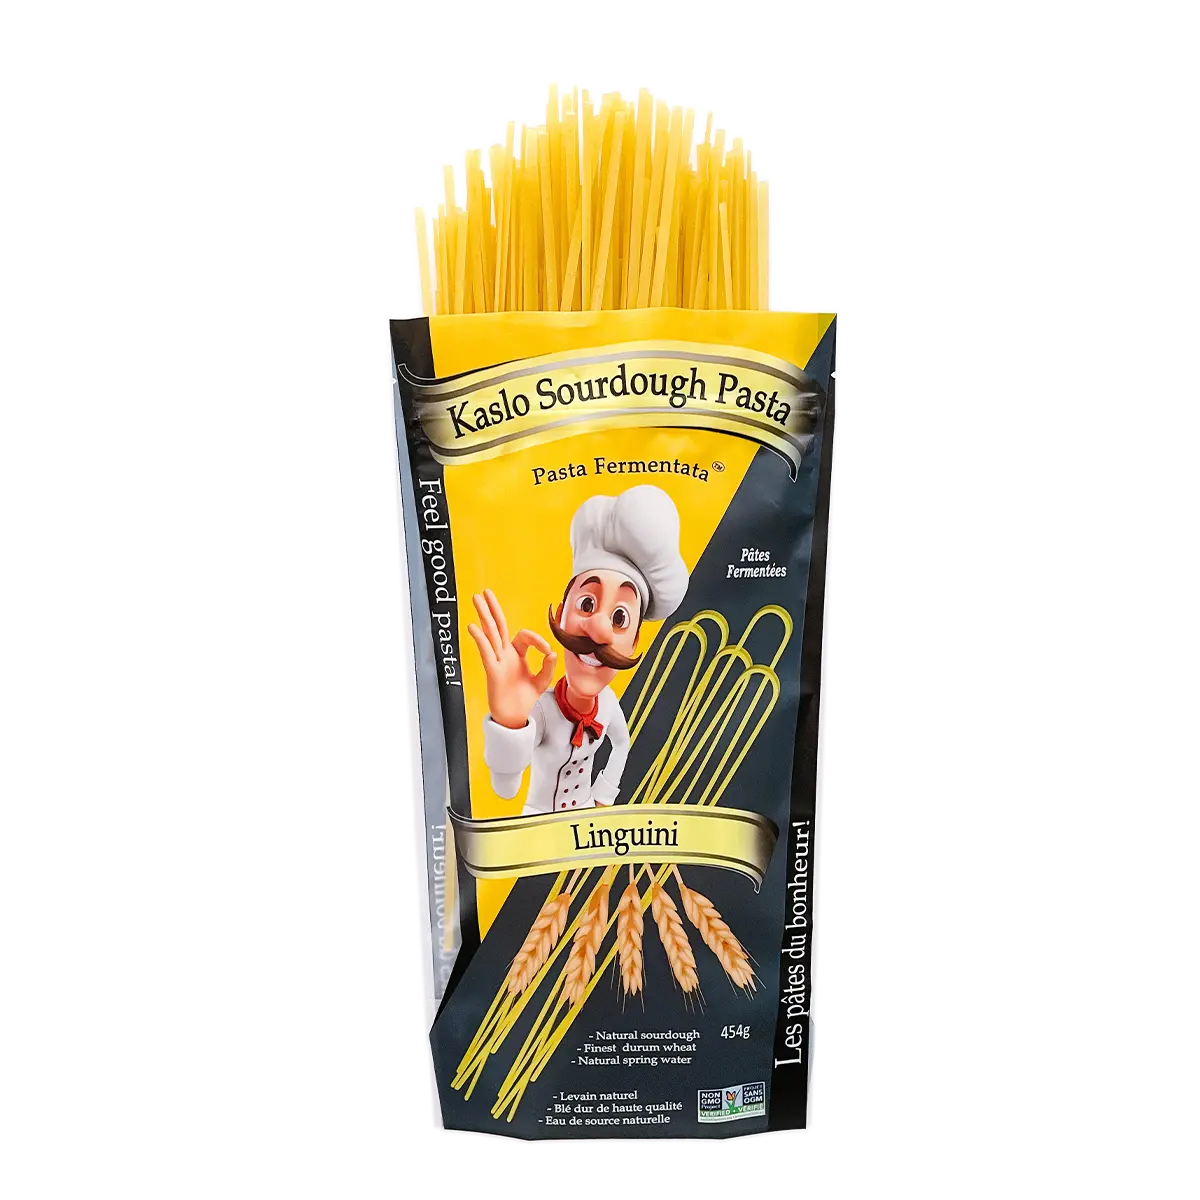 Kaslo Sourdough Pasta - Linguini 454g